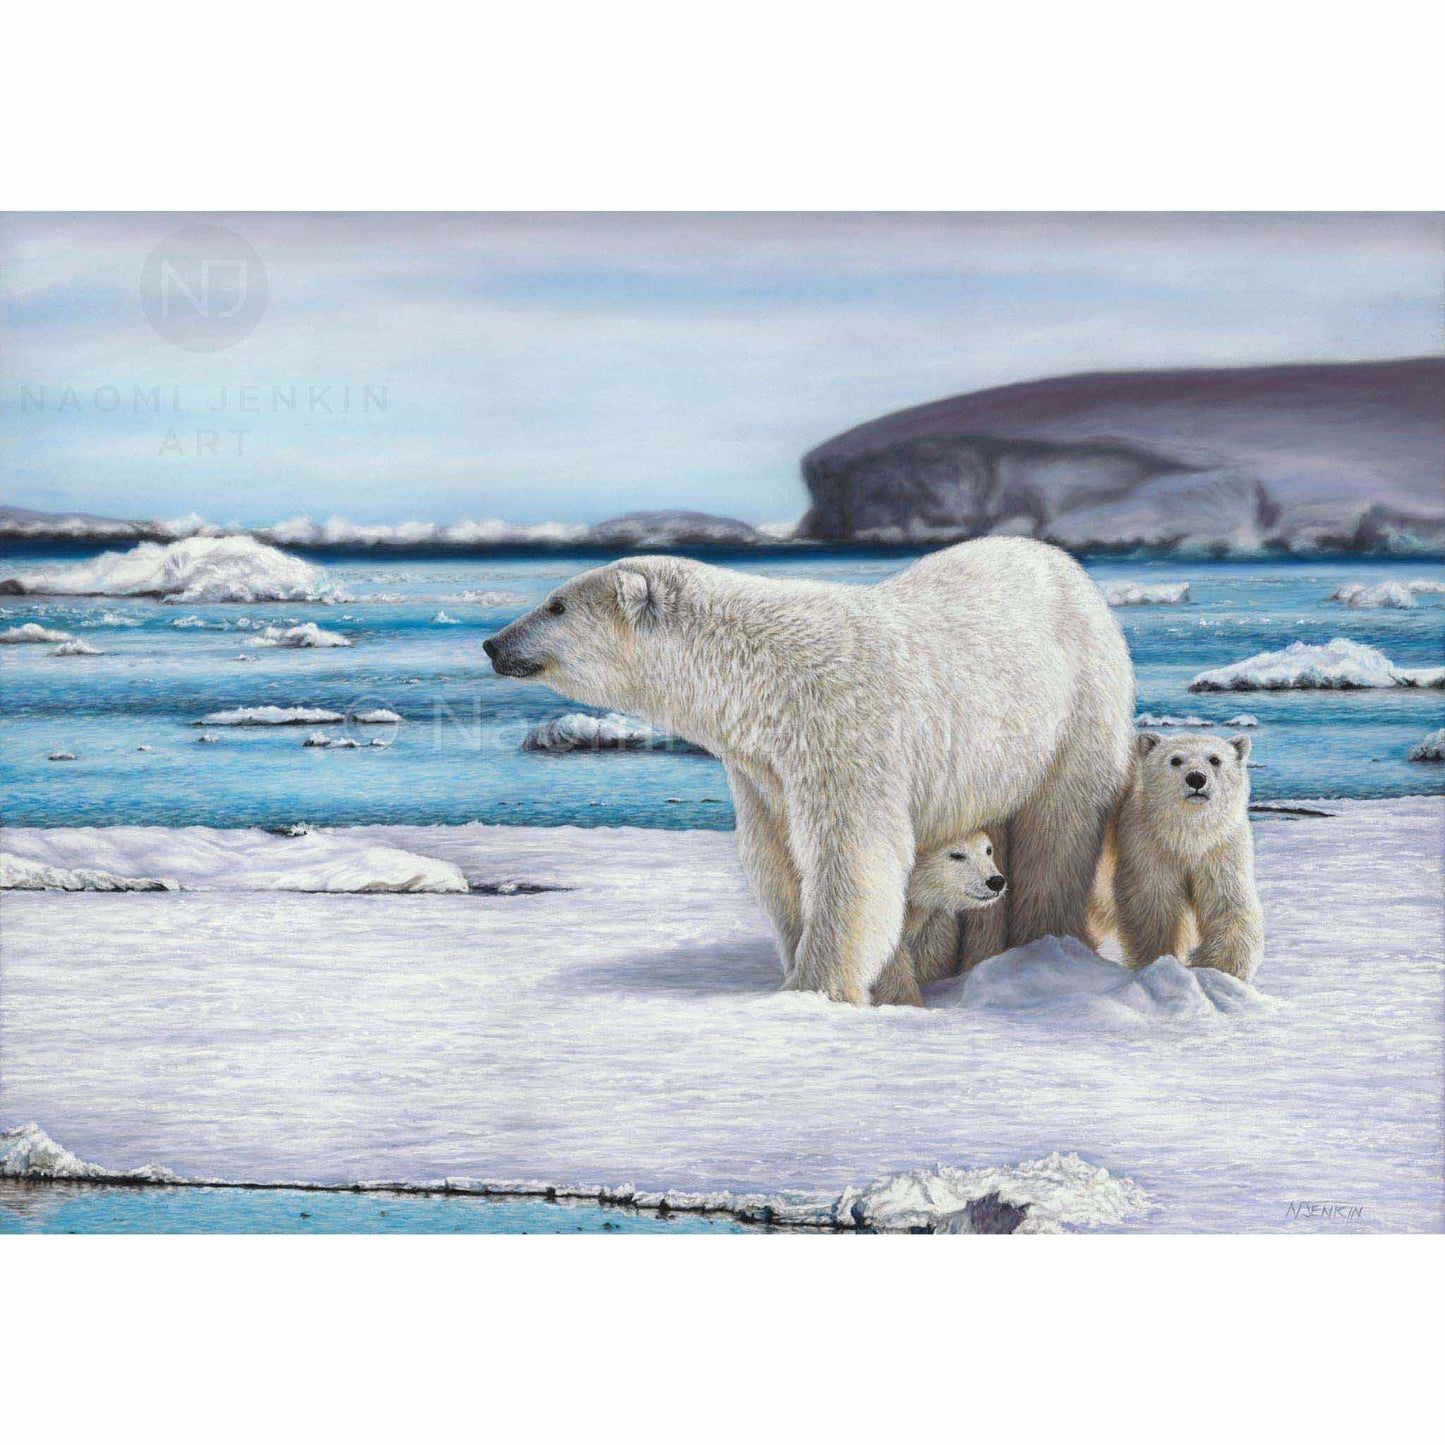 Polar bear wildlife art by Naomi Jenkin Art.